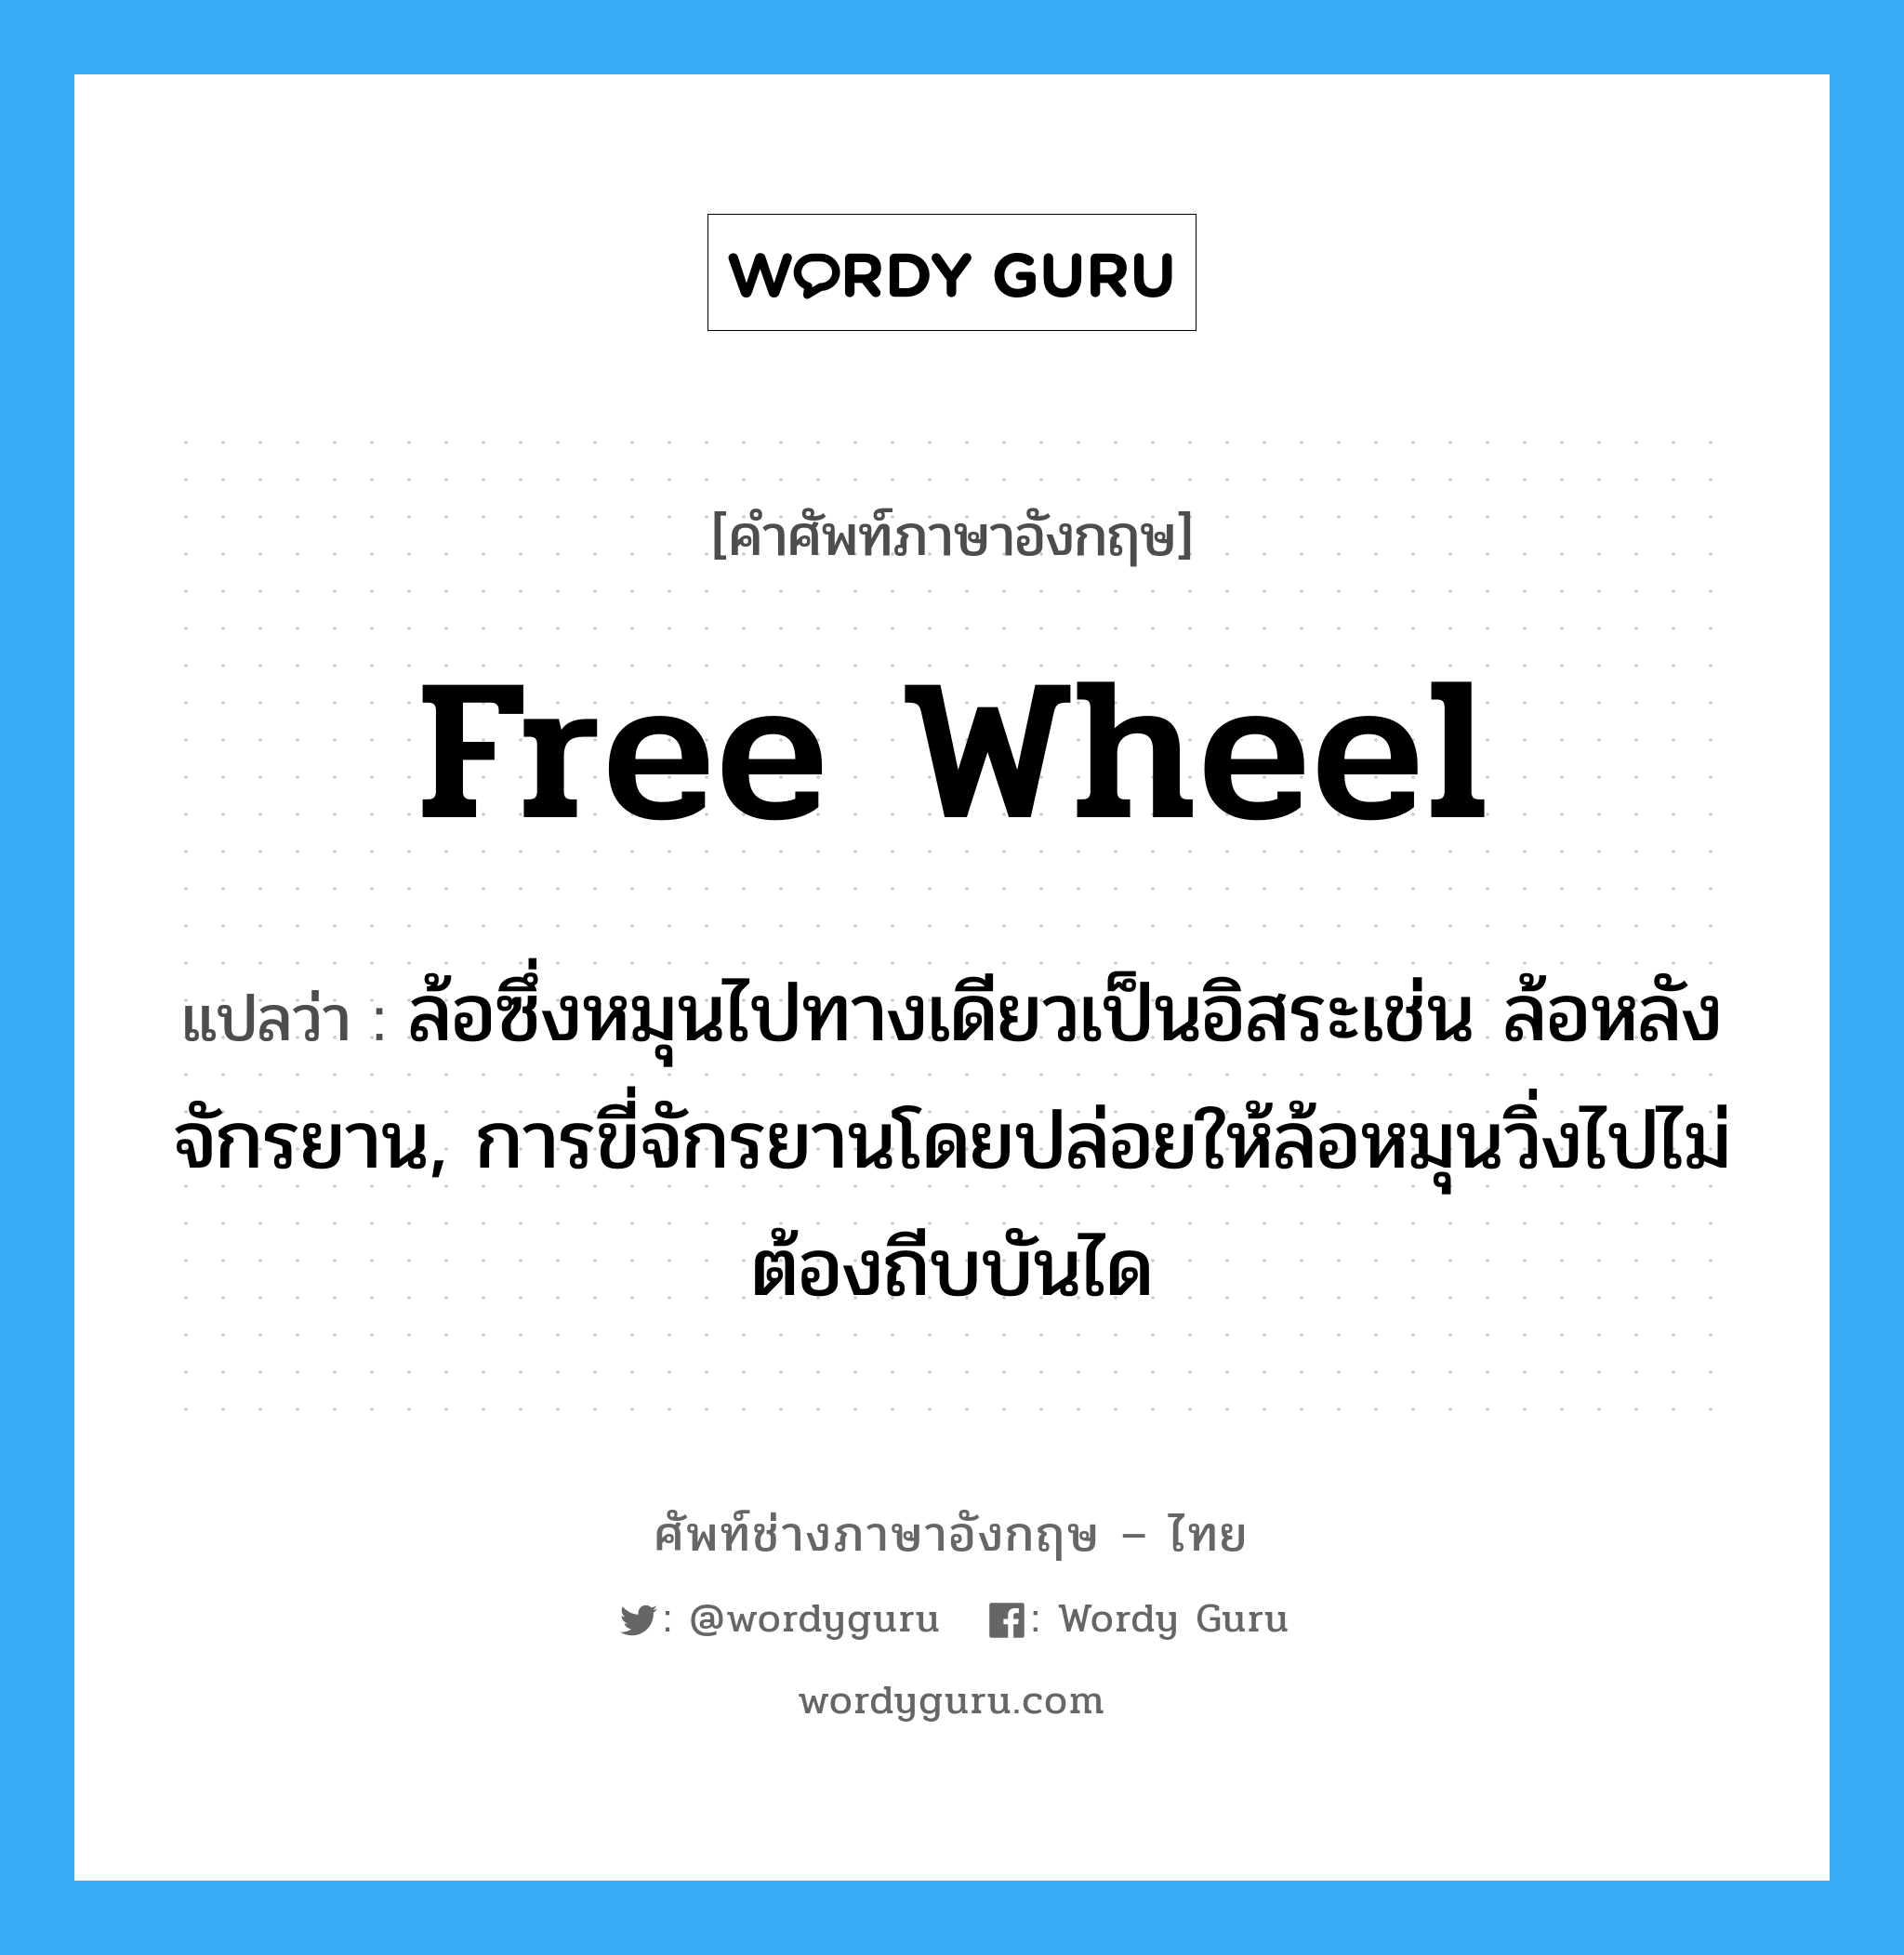 free wheel แปลว่า?, คำศัพท์ช่างภาษาอังกฤษ - ไทย free wheel คำศัพท์ภาษาอังกฤษ free wheel แปลว่า ล้อซึ่งหมุนไปทางเดียวเป็นอิสระเช่น ล้อหลังจักรยาน, การขี่จักรยานโดยปล่อยให้ล้อหมุนวิ่งไปไม่ต้องถีบบันได